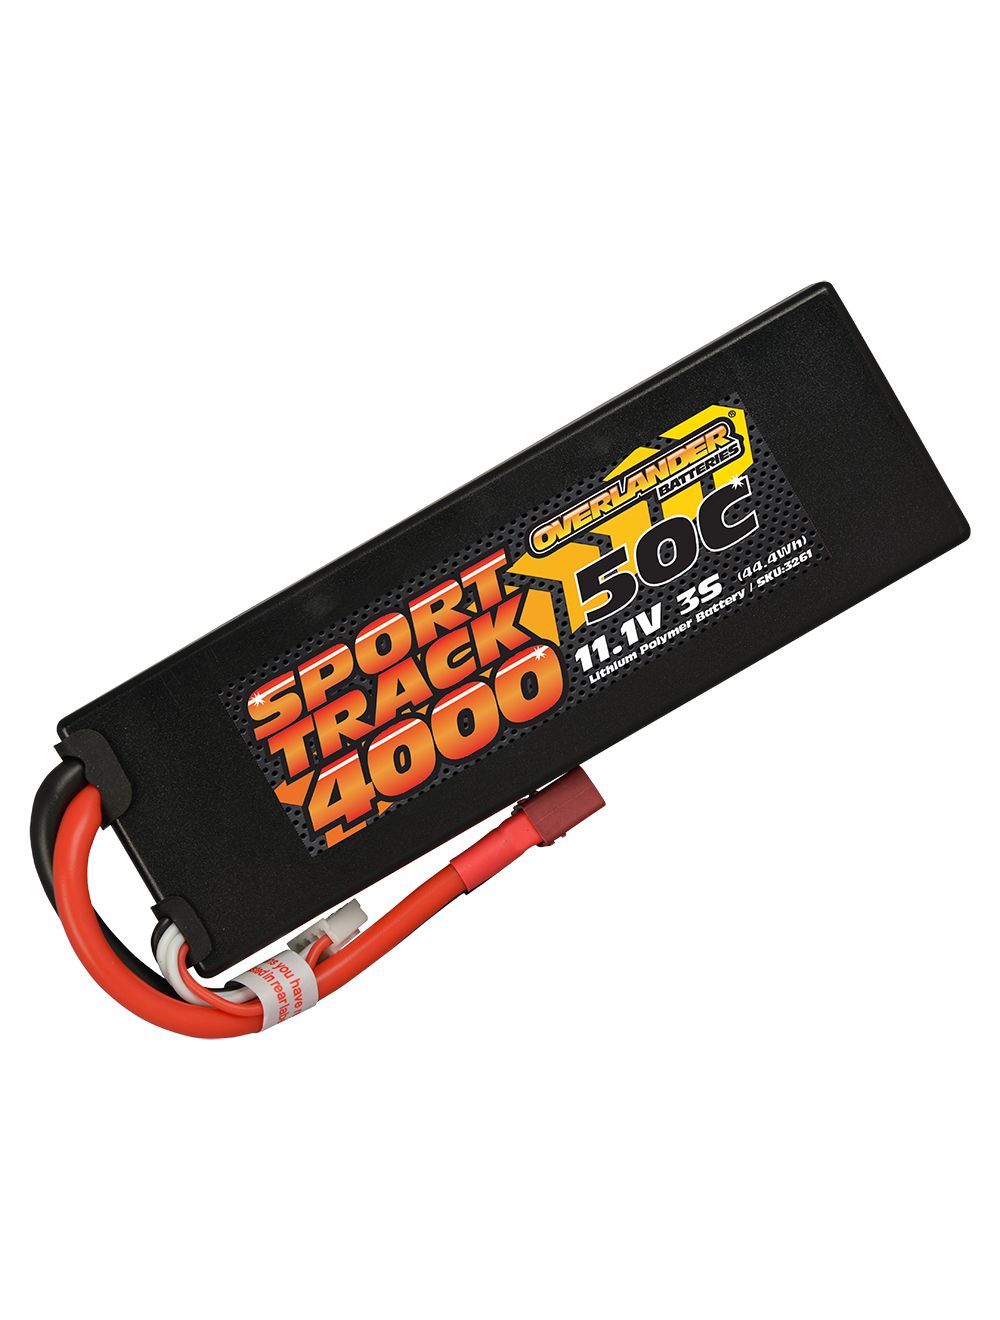 Overlander 4000mAh 11.1V 3S 50C Hard Case Sport Track LiPo Battery - XT90 Connector 3261